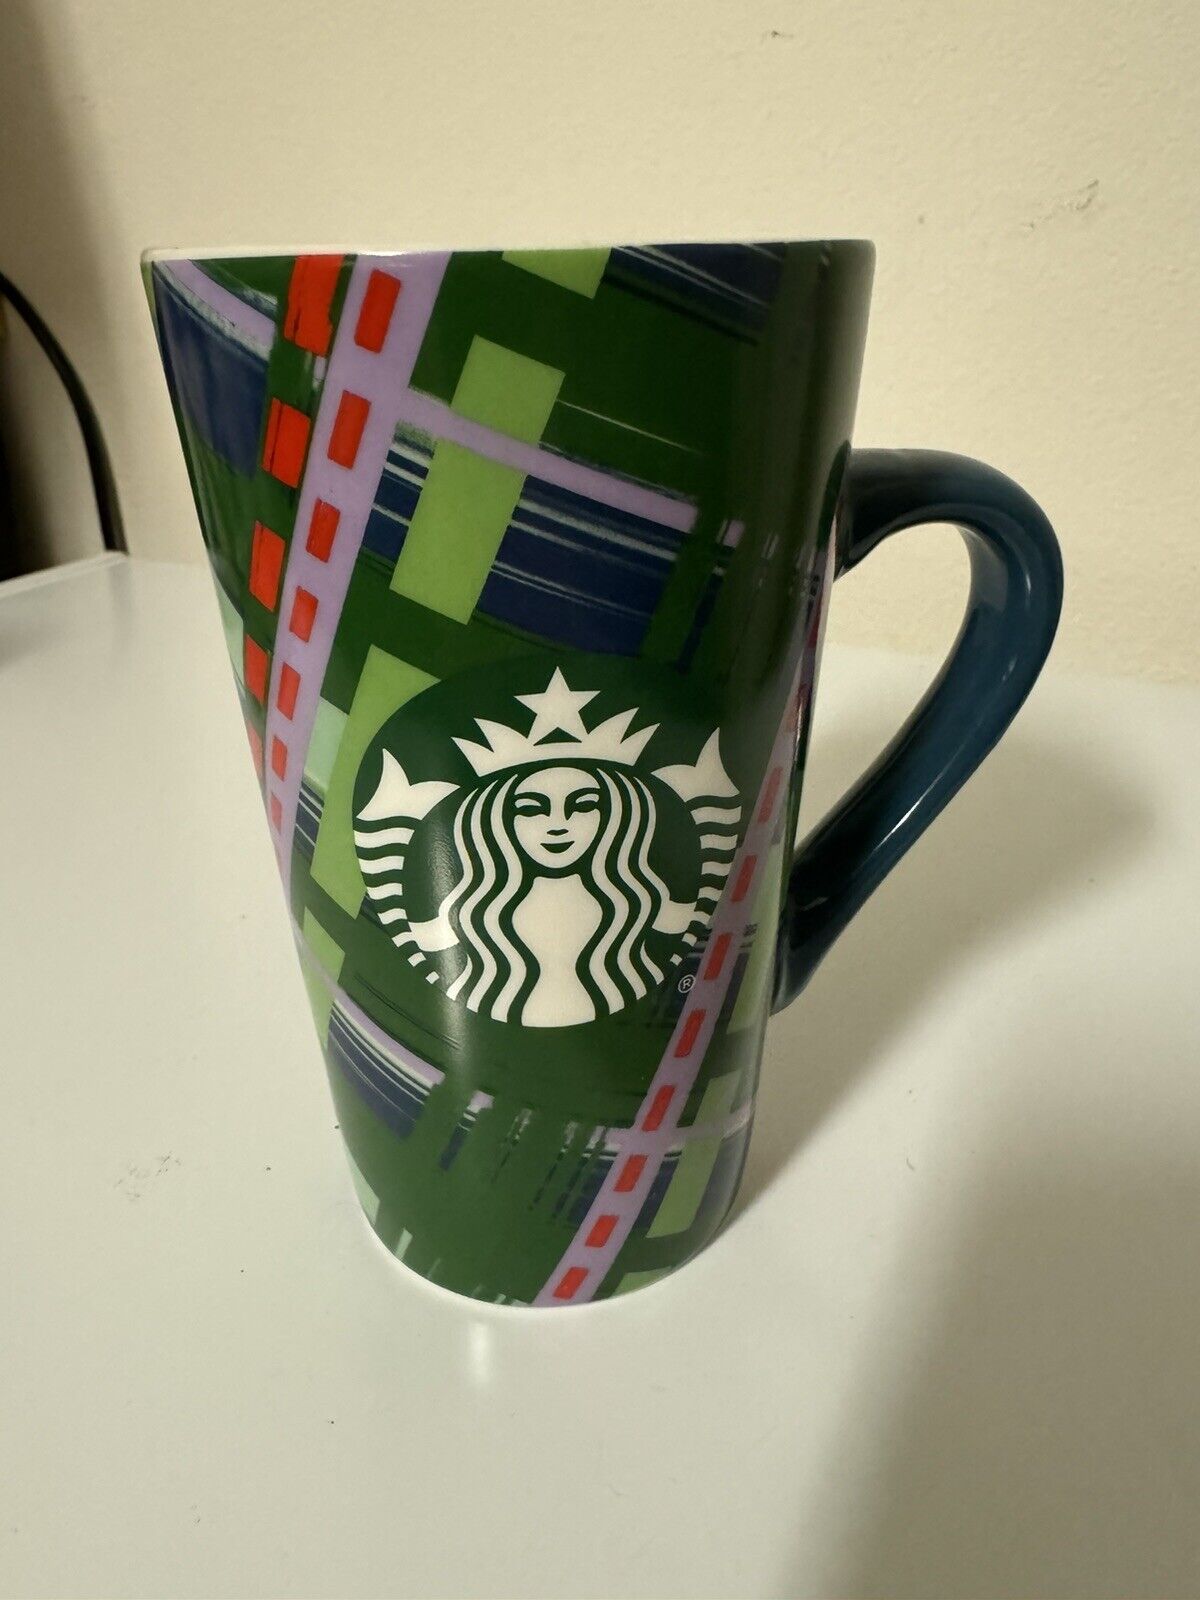 Starbucks Ceramic Mug Cup Coffee Tea 16 oz Grande Green Plaid 2020